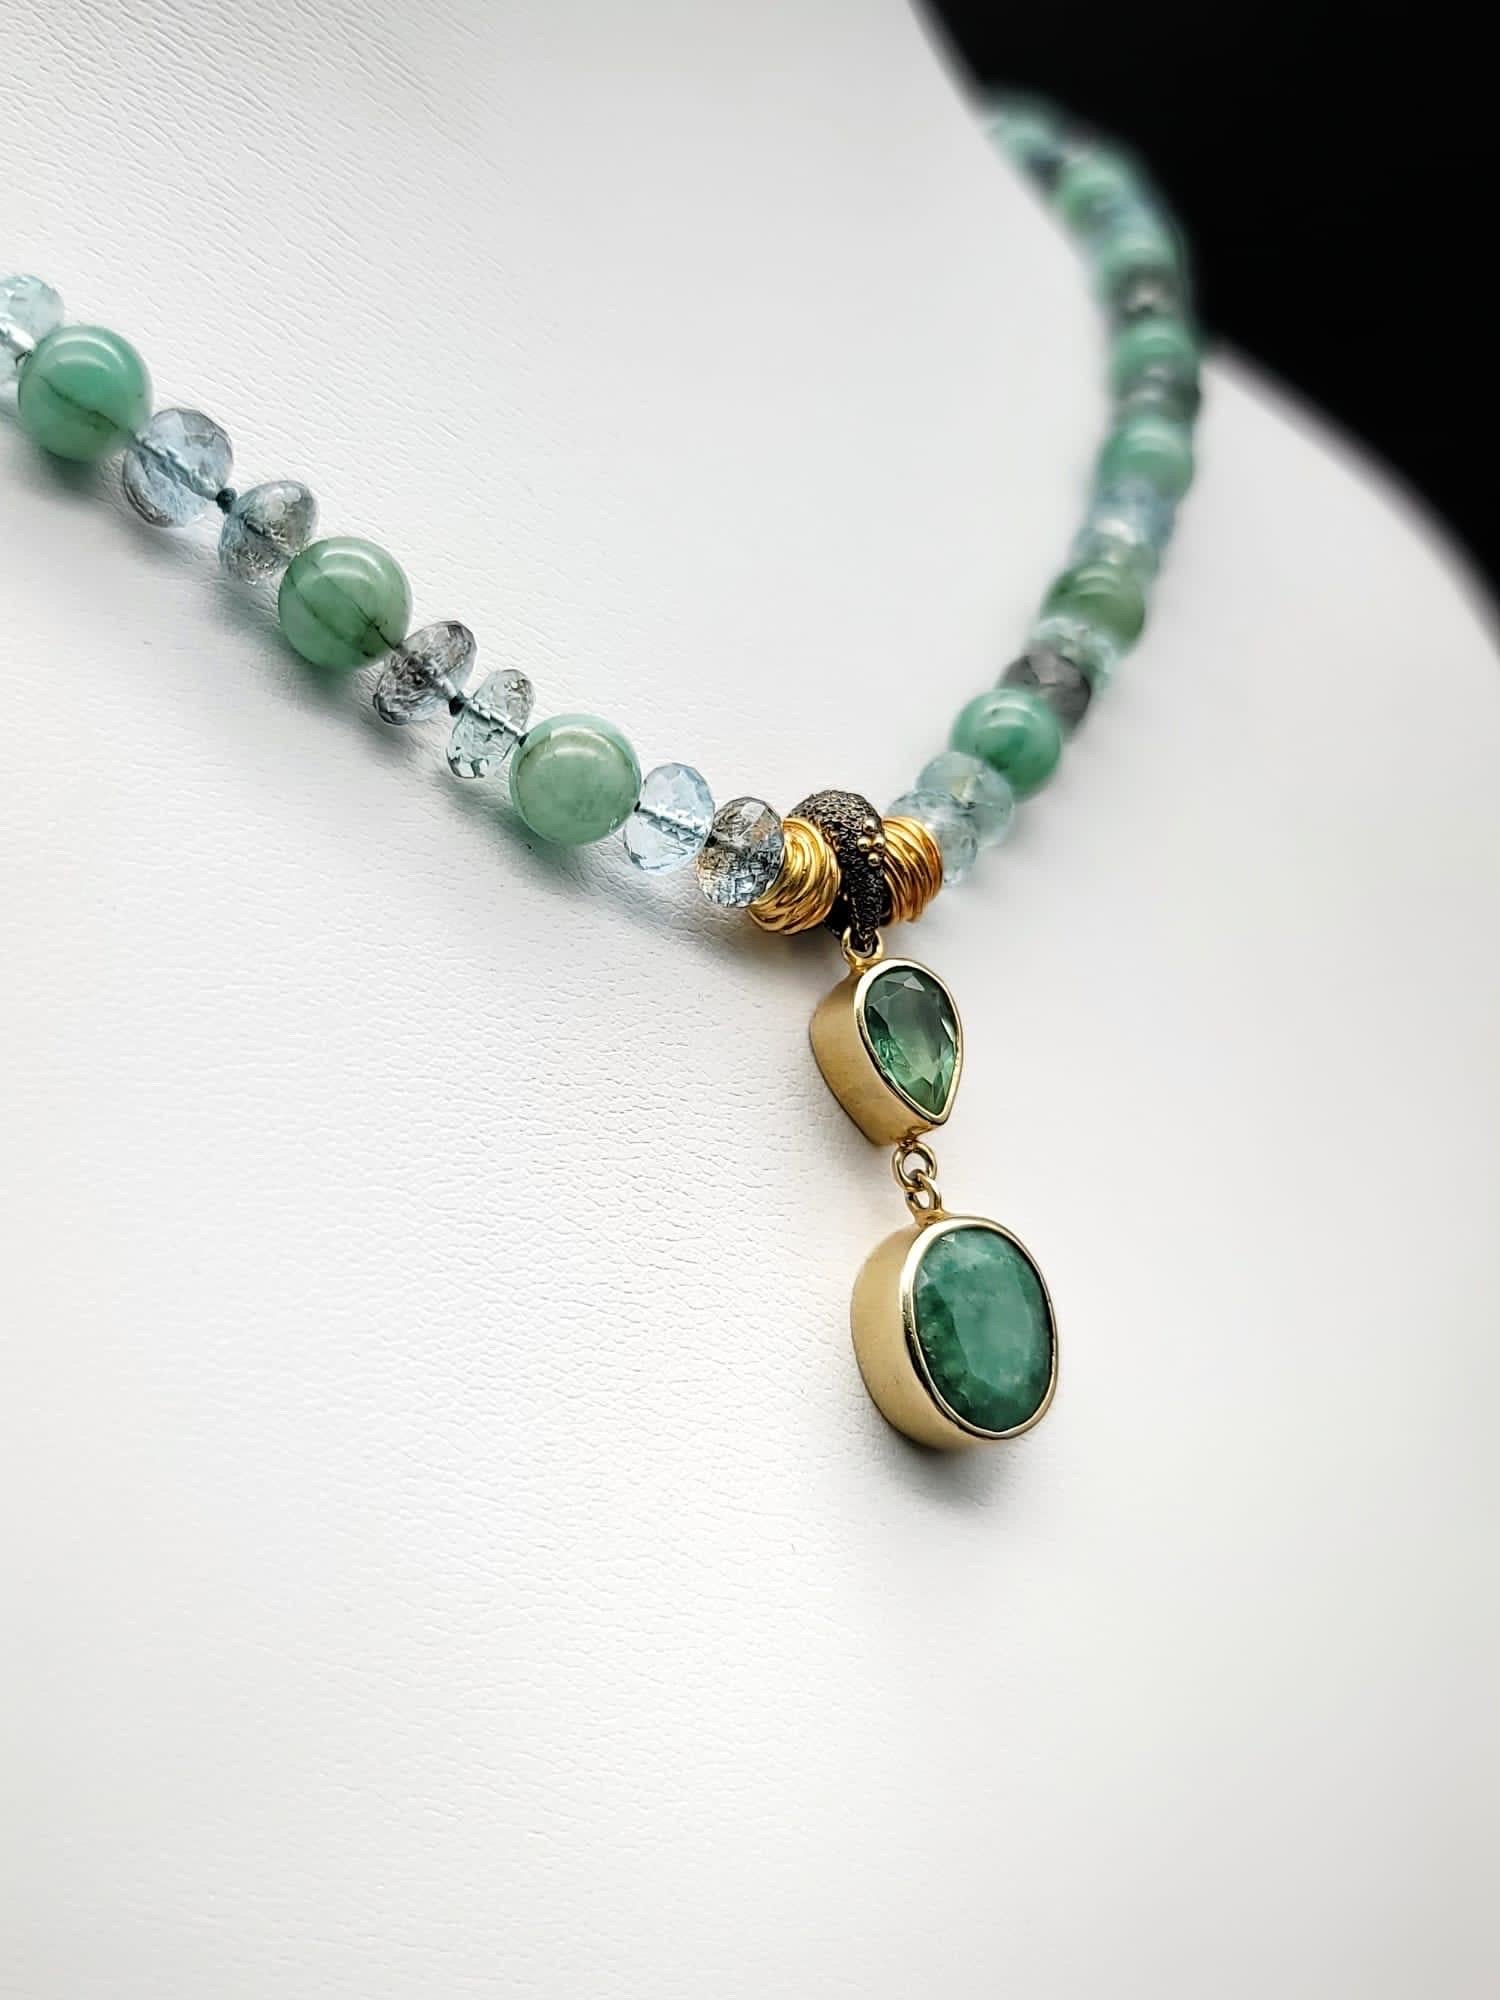 Women's A.Jeschel Emerald pendant and Aquamarine necklace.